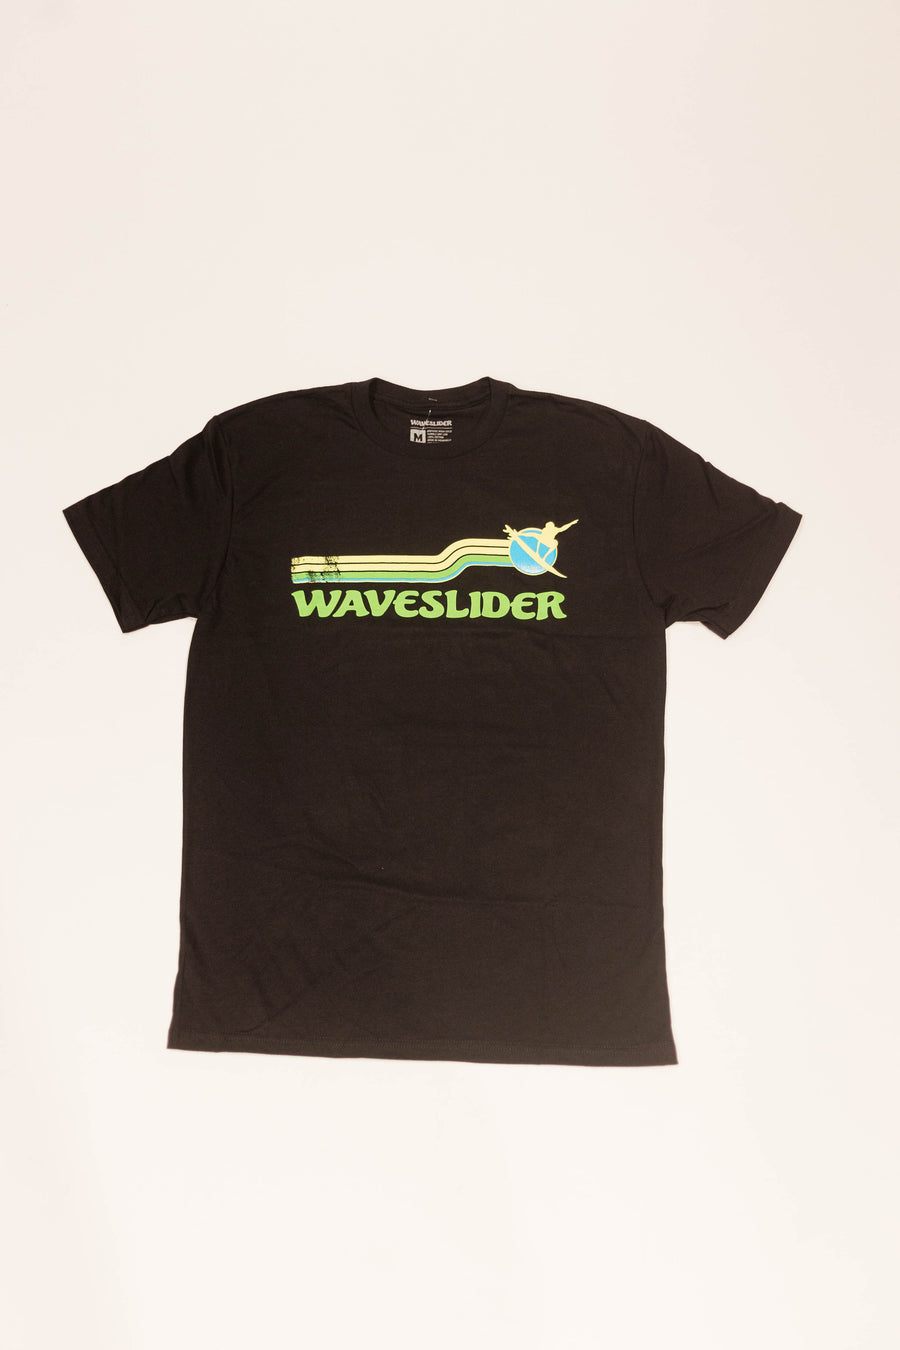 Waveslider Retro Adult T-Shirt Black